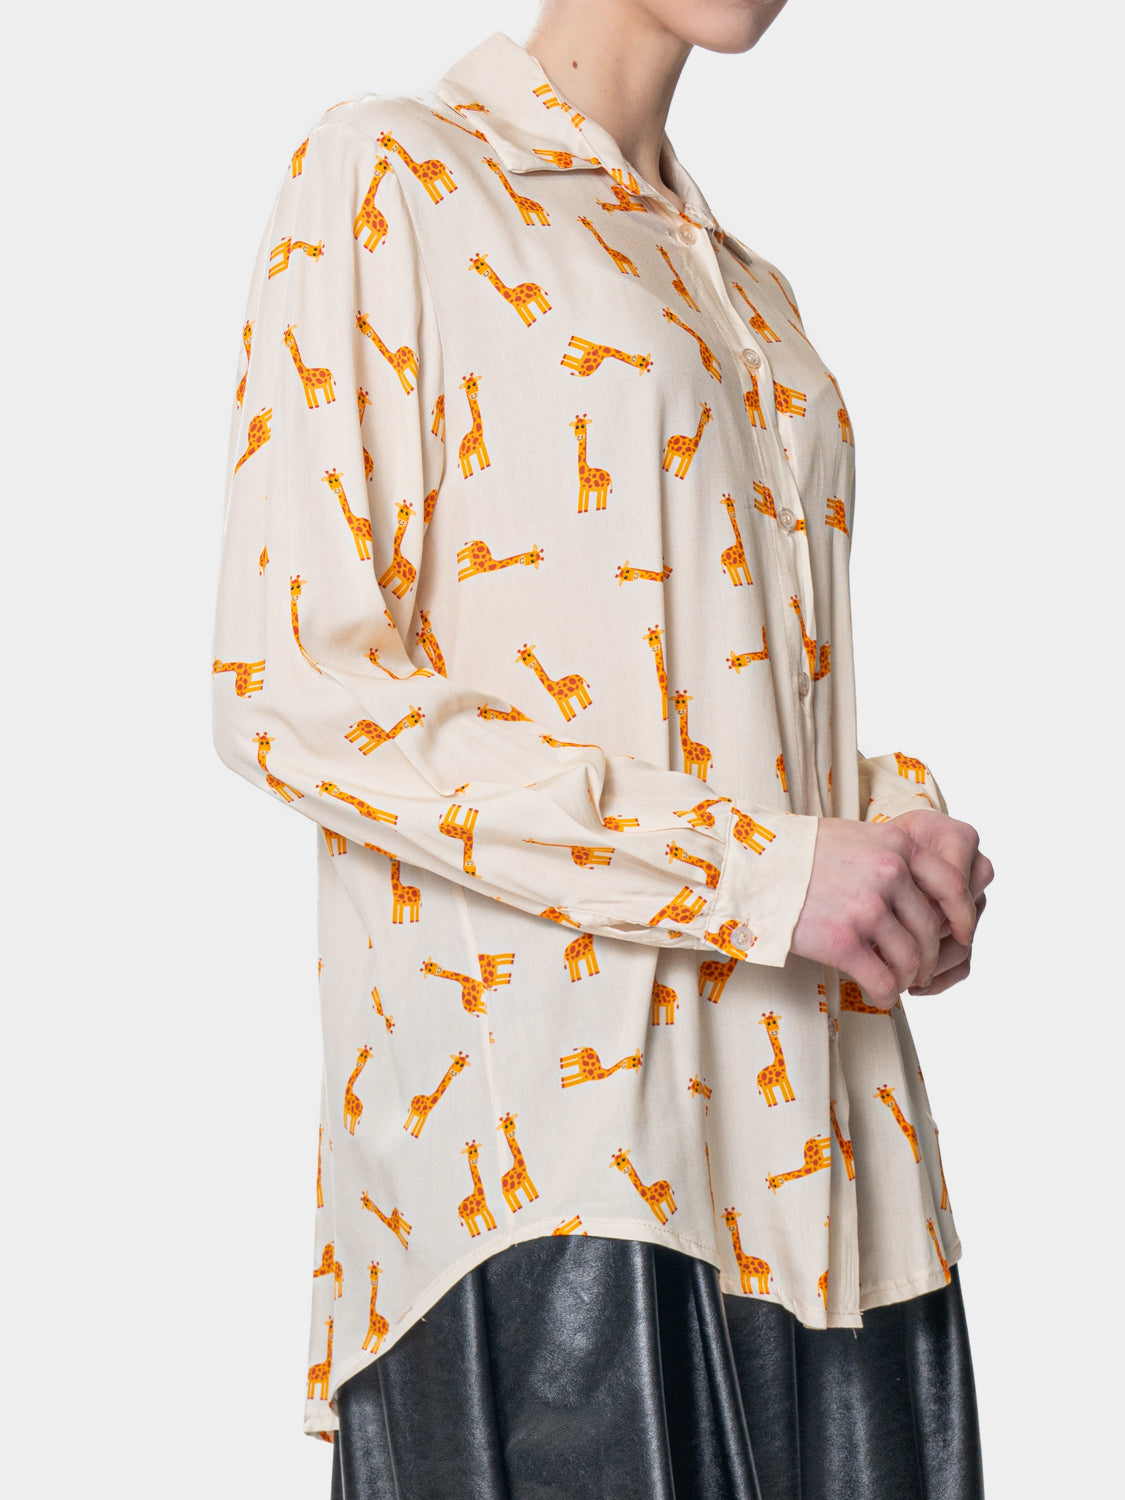 Camicia fantasia giraffe